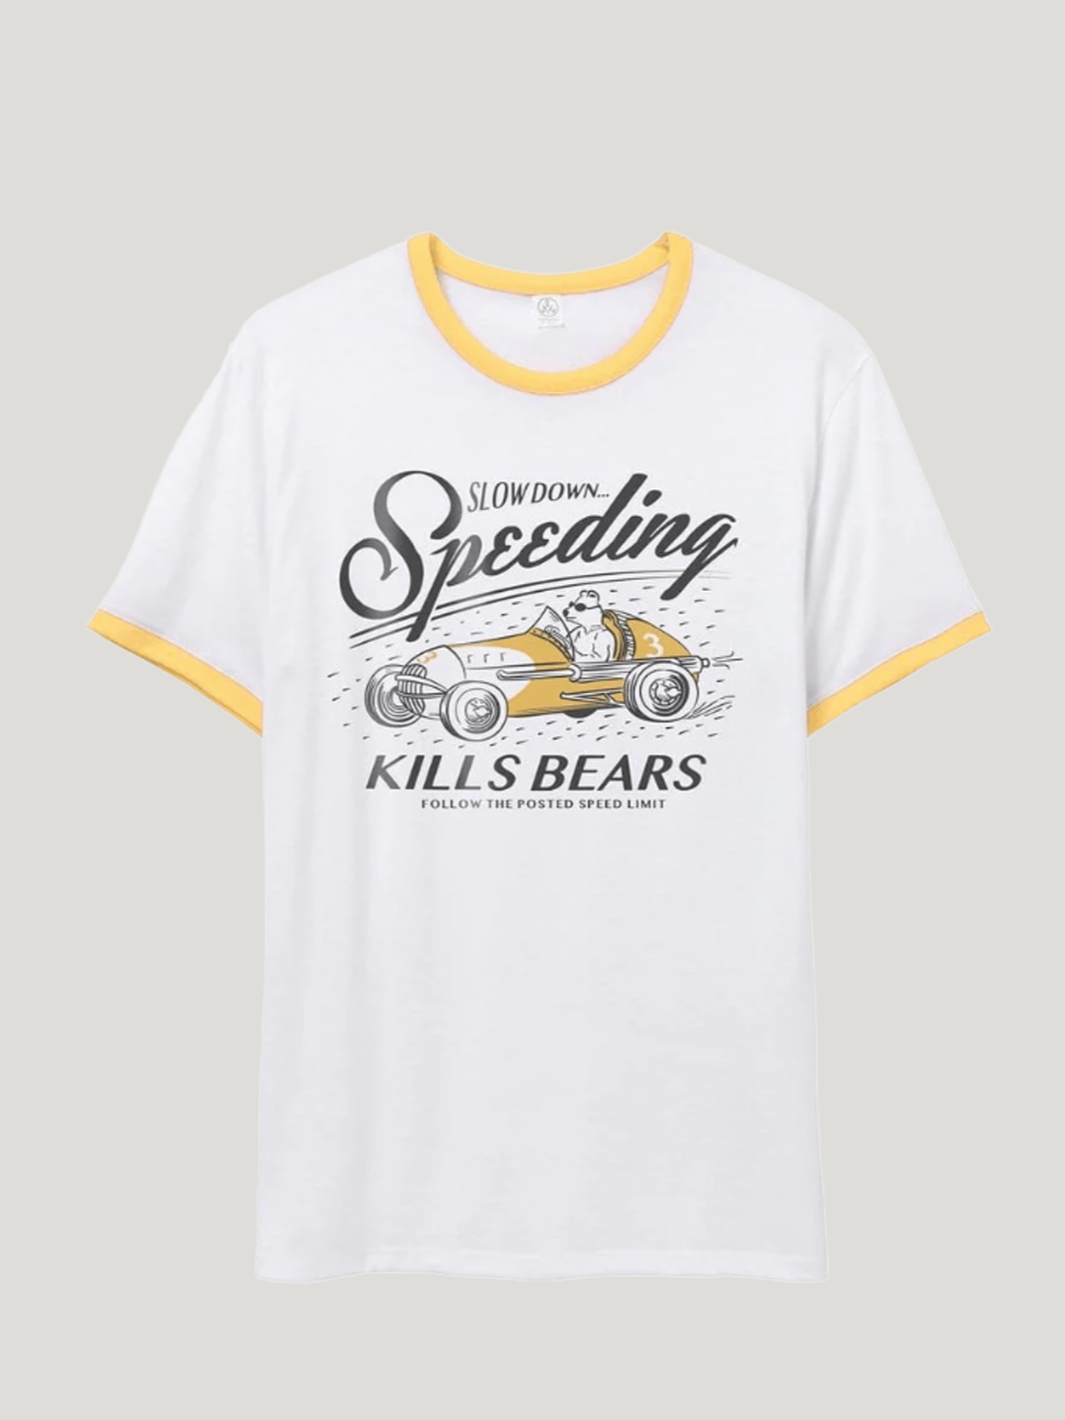 Speeding Kills Bears T-Shirt - Heyday